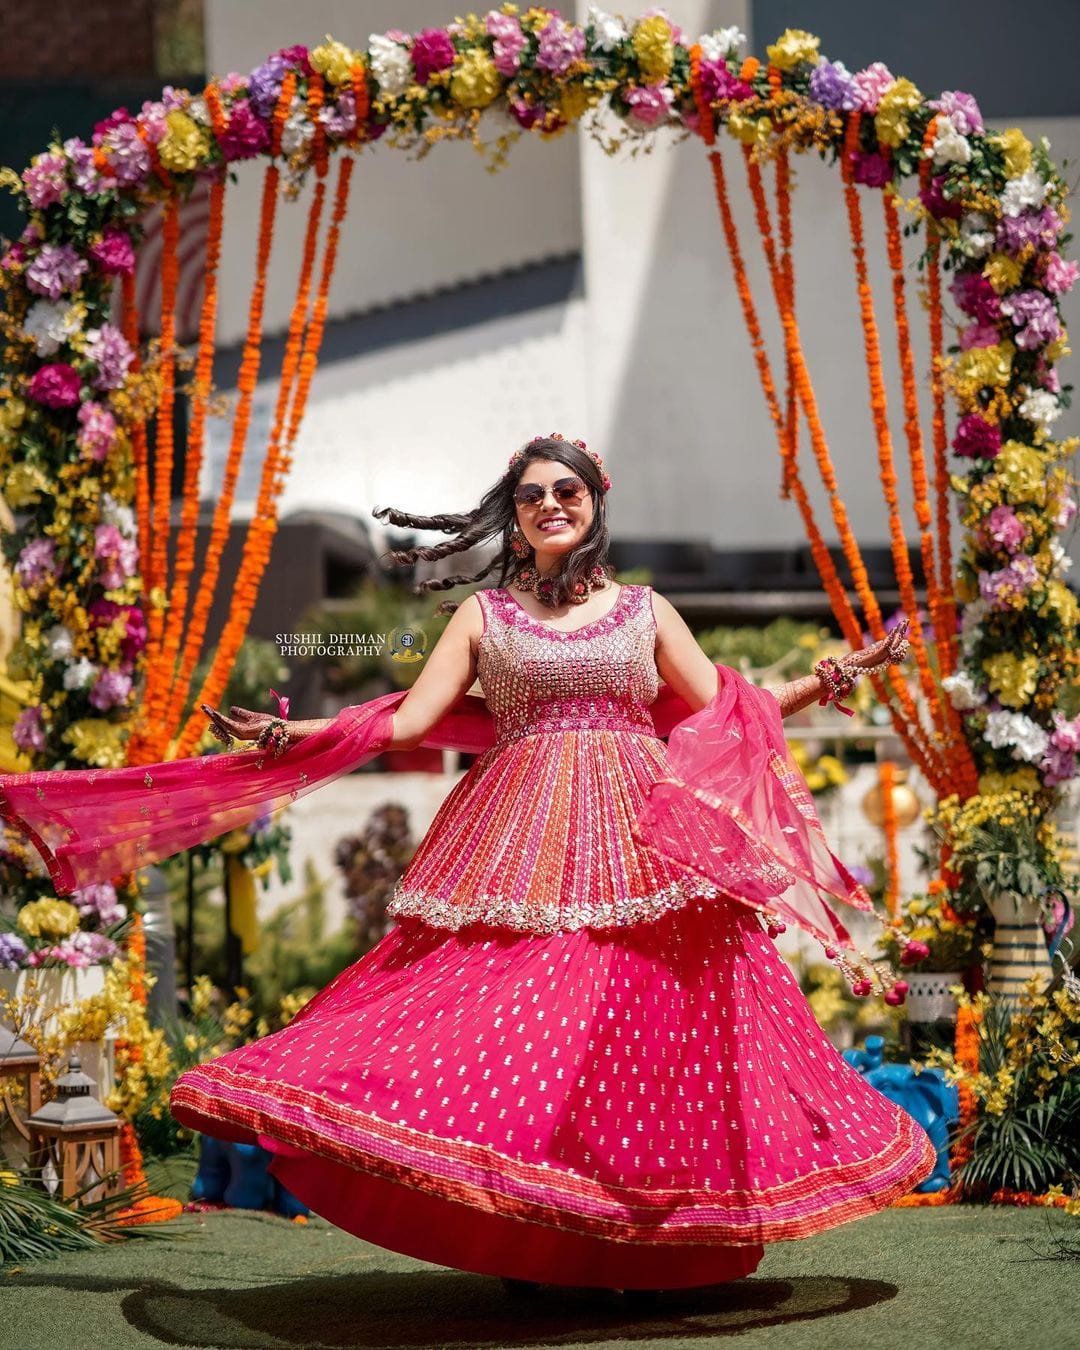 LAMANSH new floral sets Gold Pink Orange / Standard / Bridal Style 🔥 LAMANSH® Bridal Dry Flower Jewellery set with Tiara / Best for Haldi - Mehendi ceremony